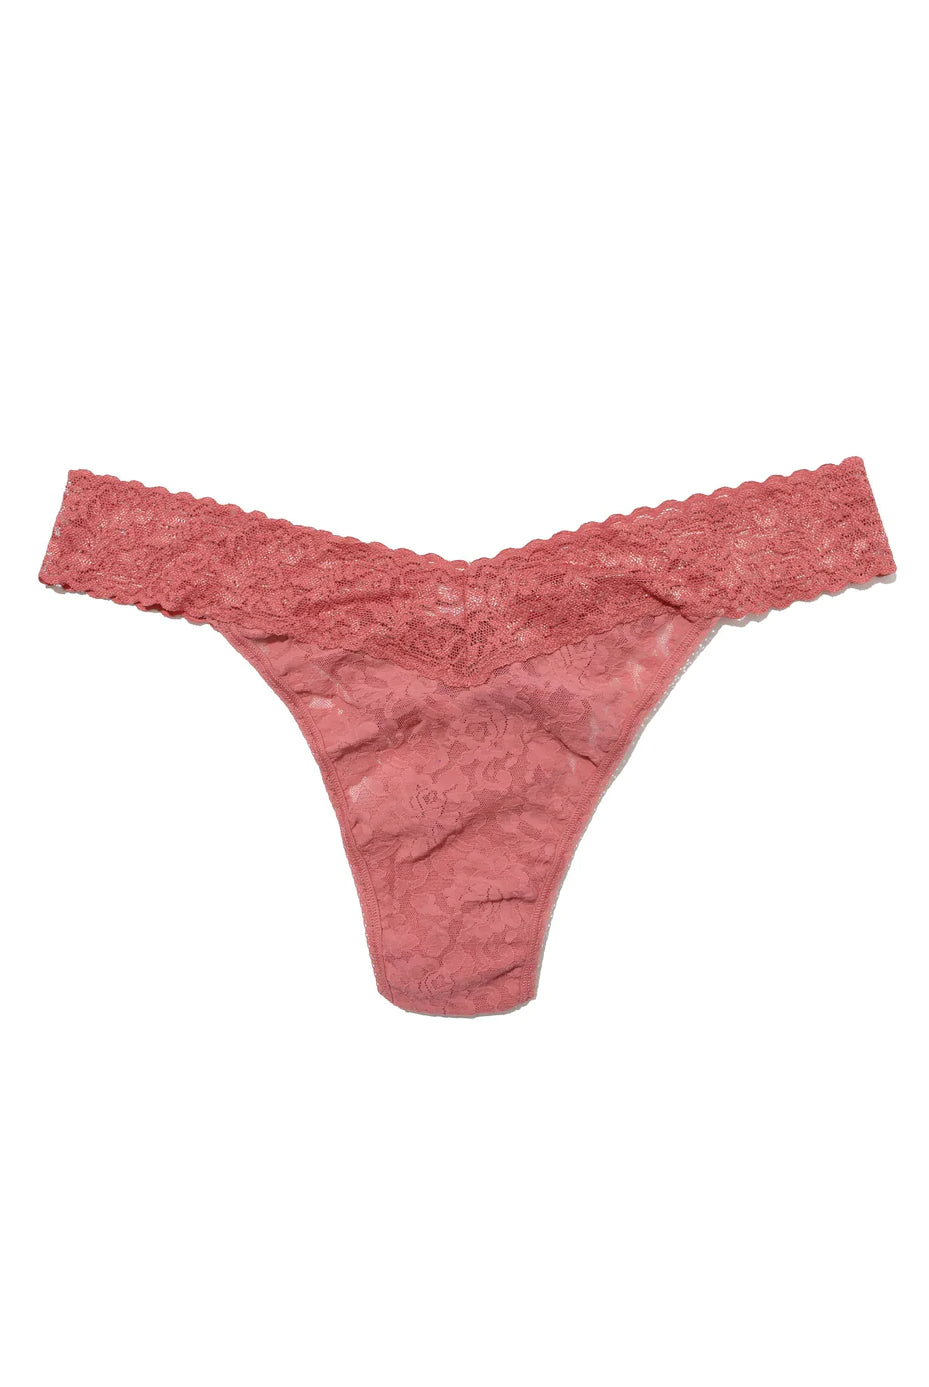 Signature Lace Original Rise Thong - Pink Sands - Flirt! Luxe Lingerie & Sleepwear